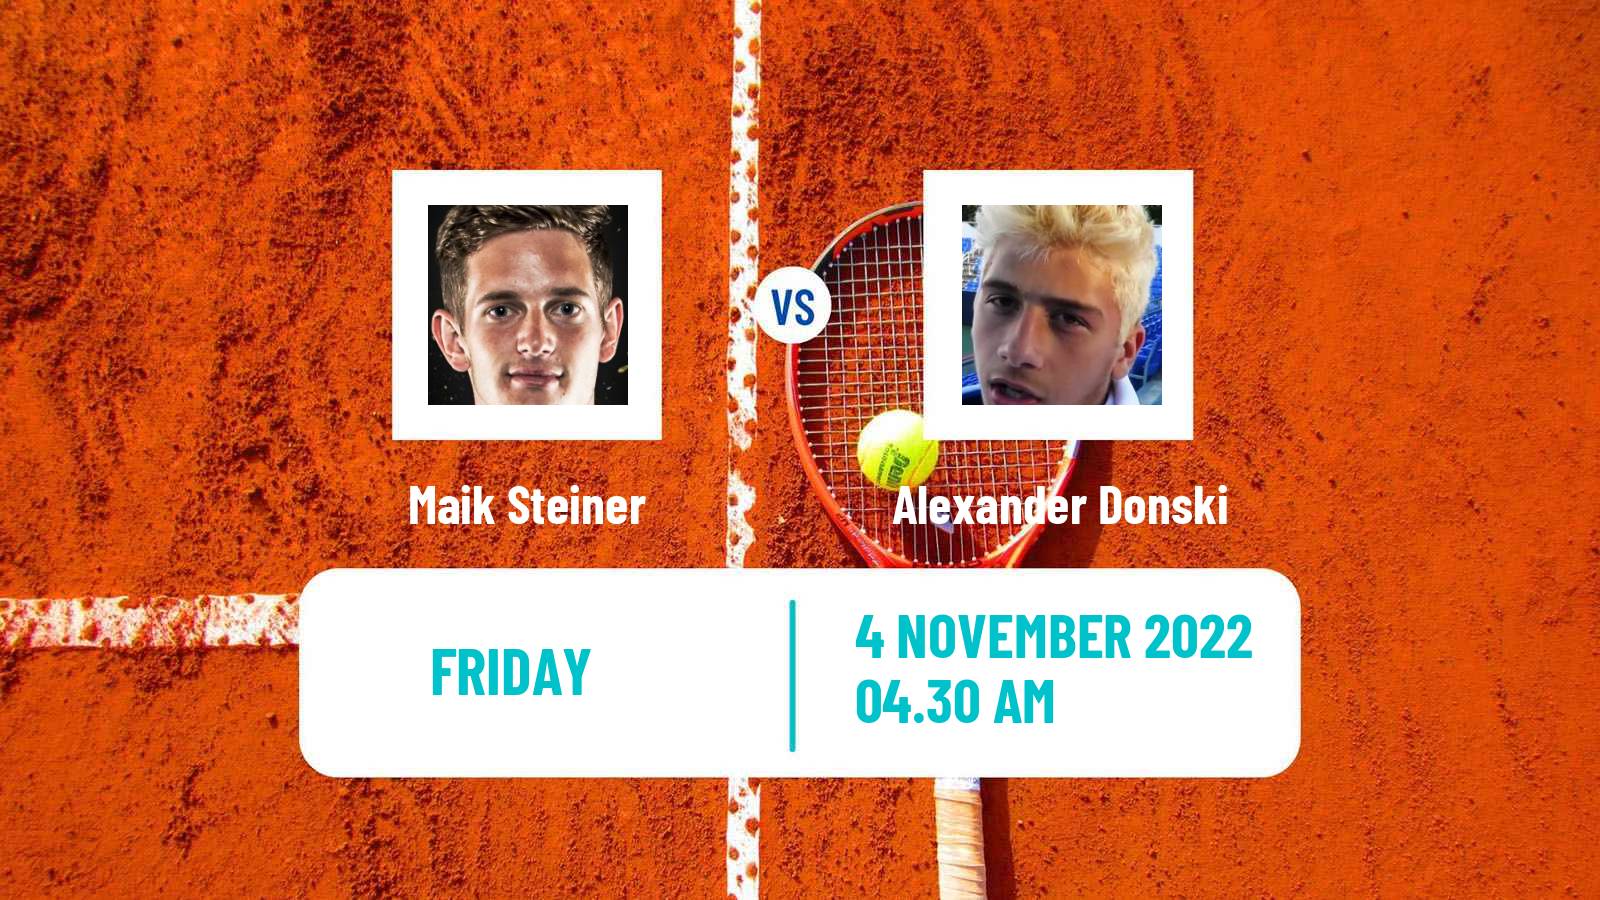 Tennis ITF Tournaments Maik Steiner - Alexander Donski